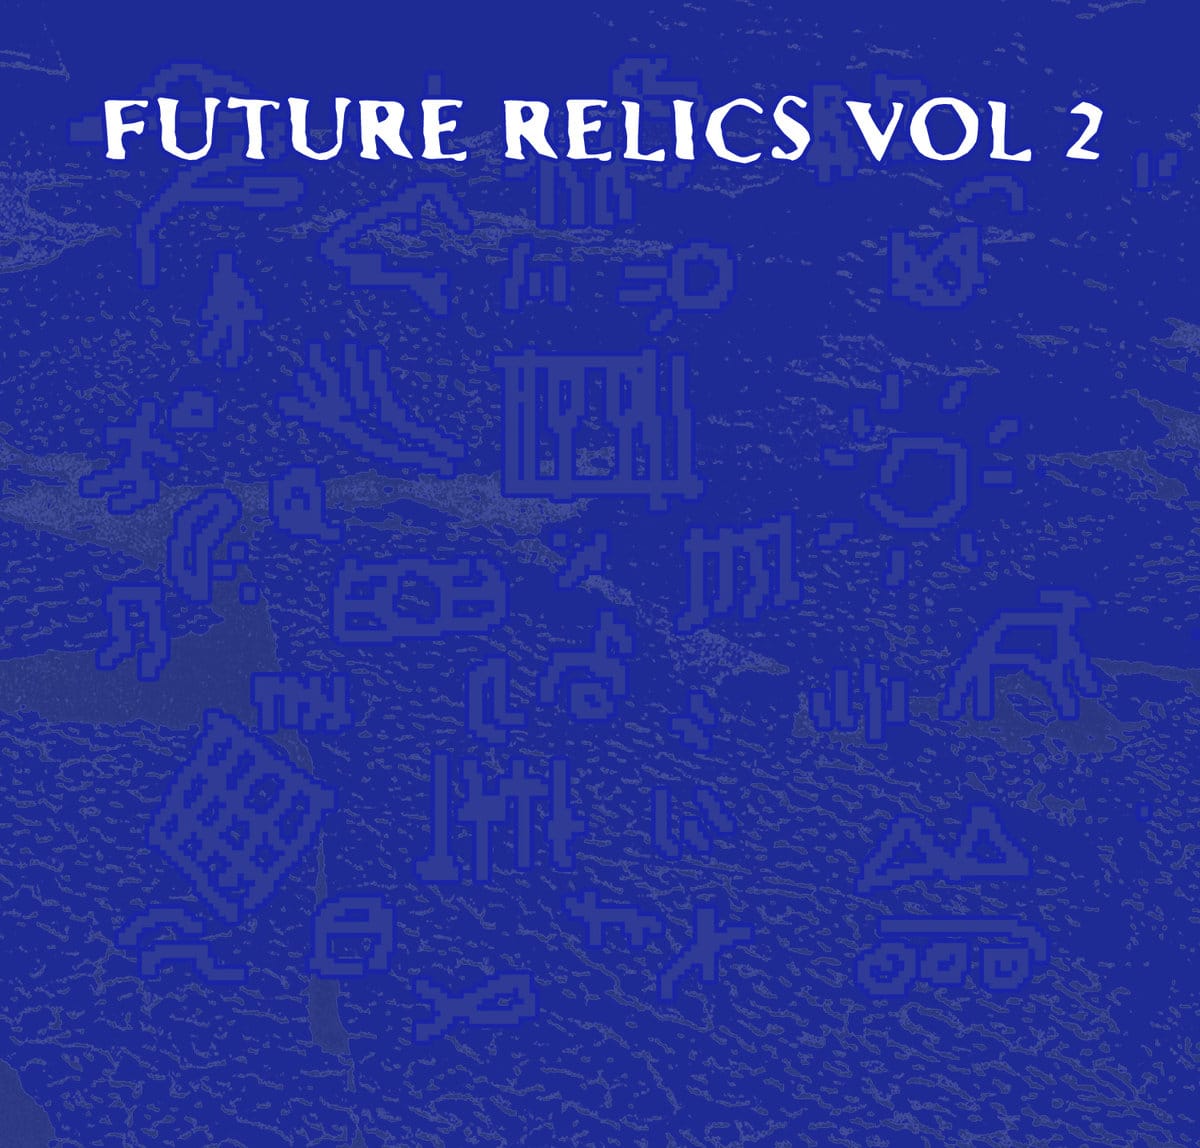 Intelligent Sound - "Future Relics Vol. 2" (Release)